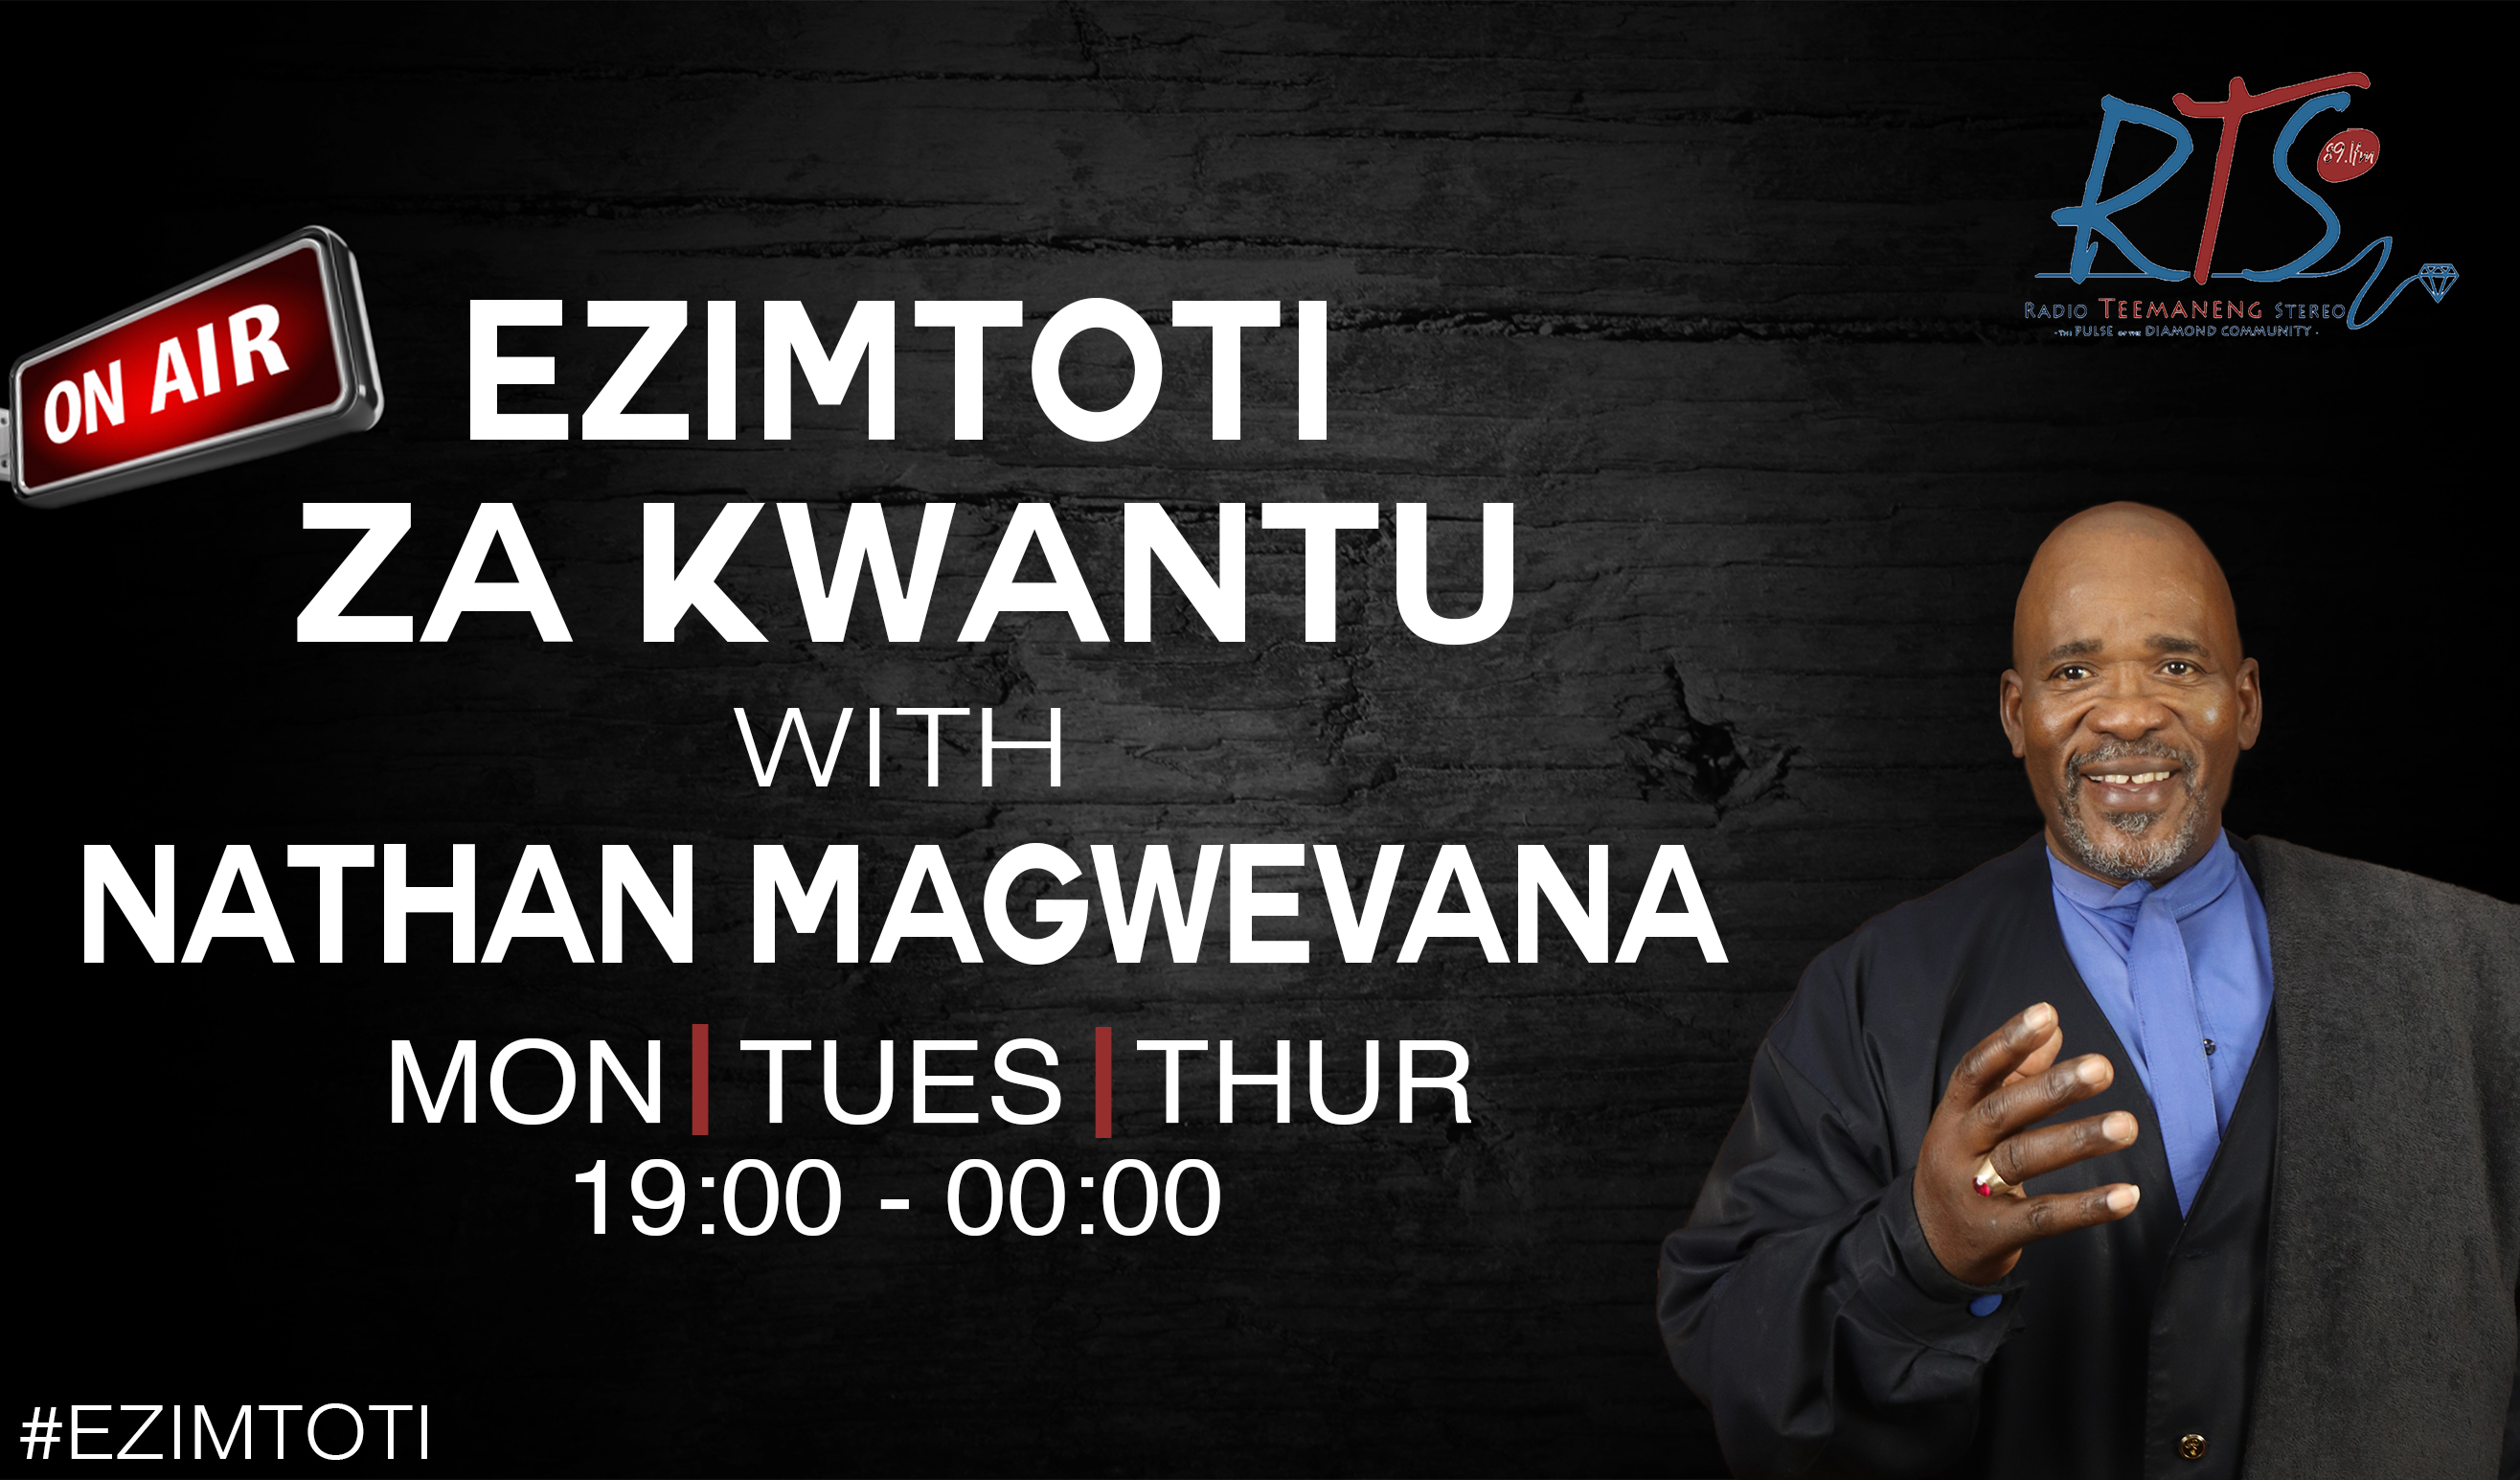 Ezimtoti Za Kwantu Mon, Tues & Thur 19:00 - 00:00